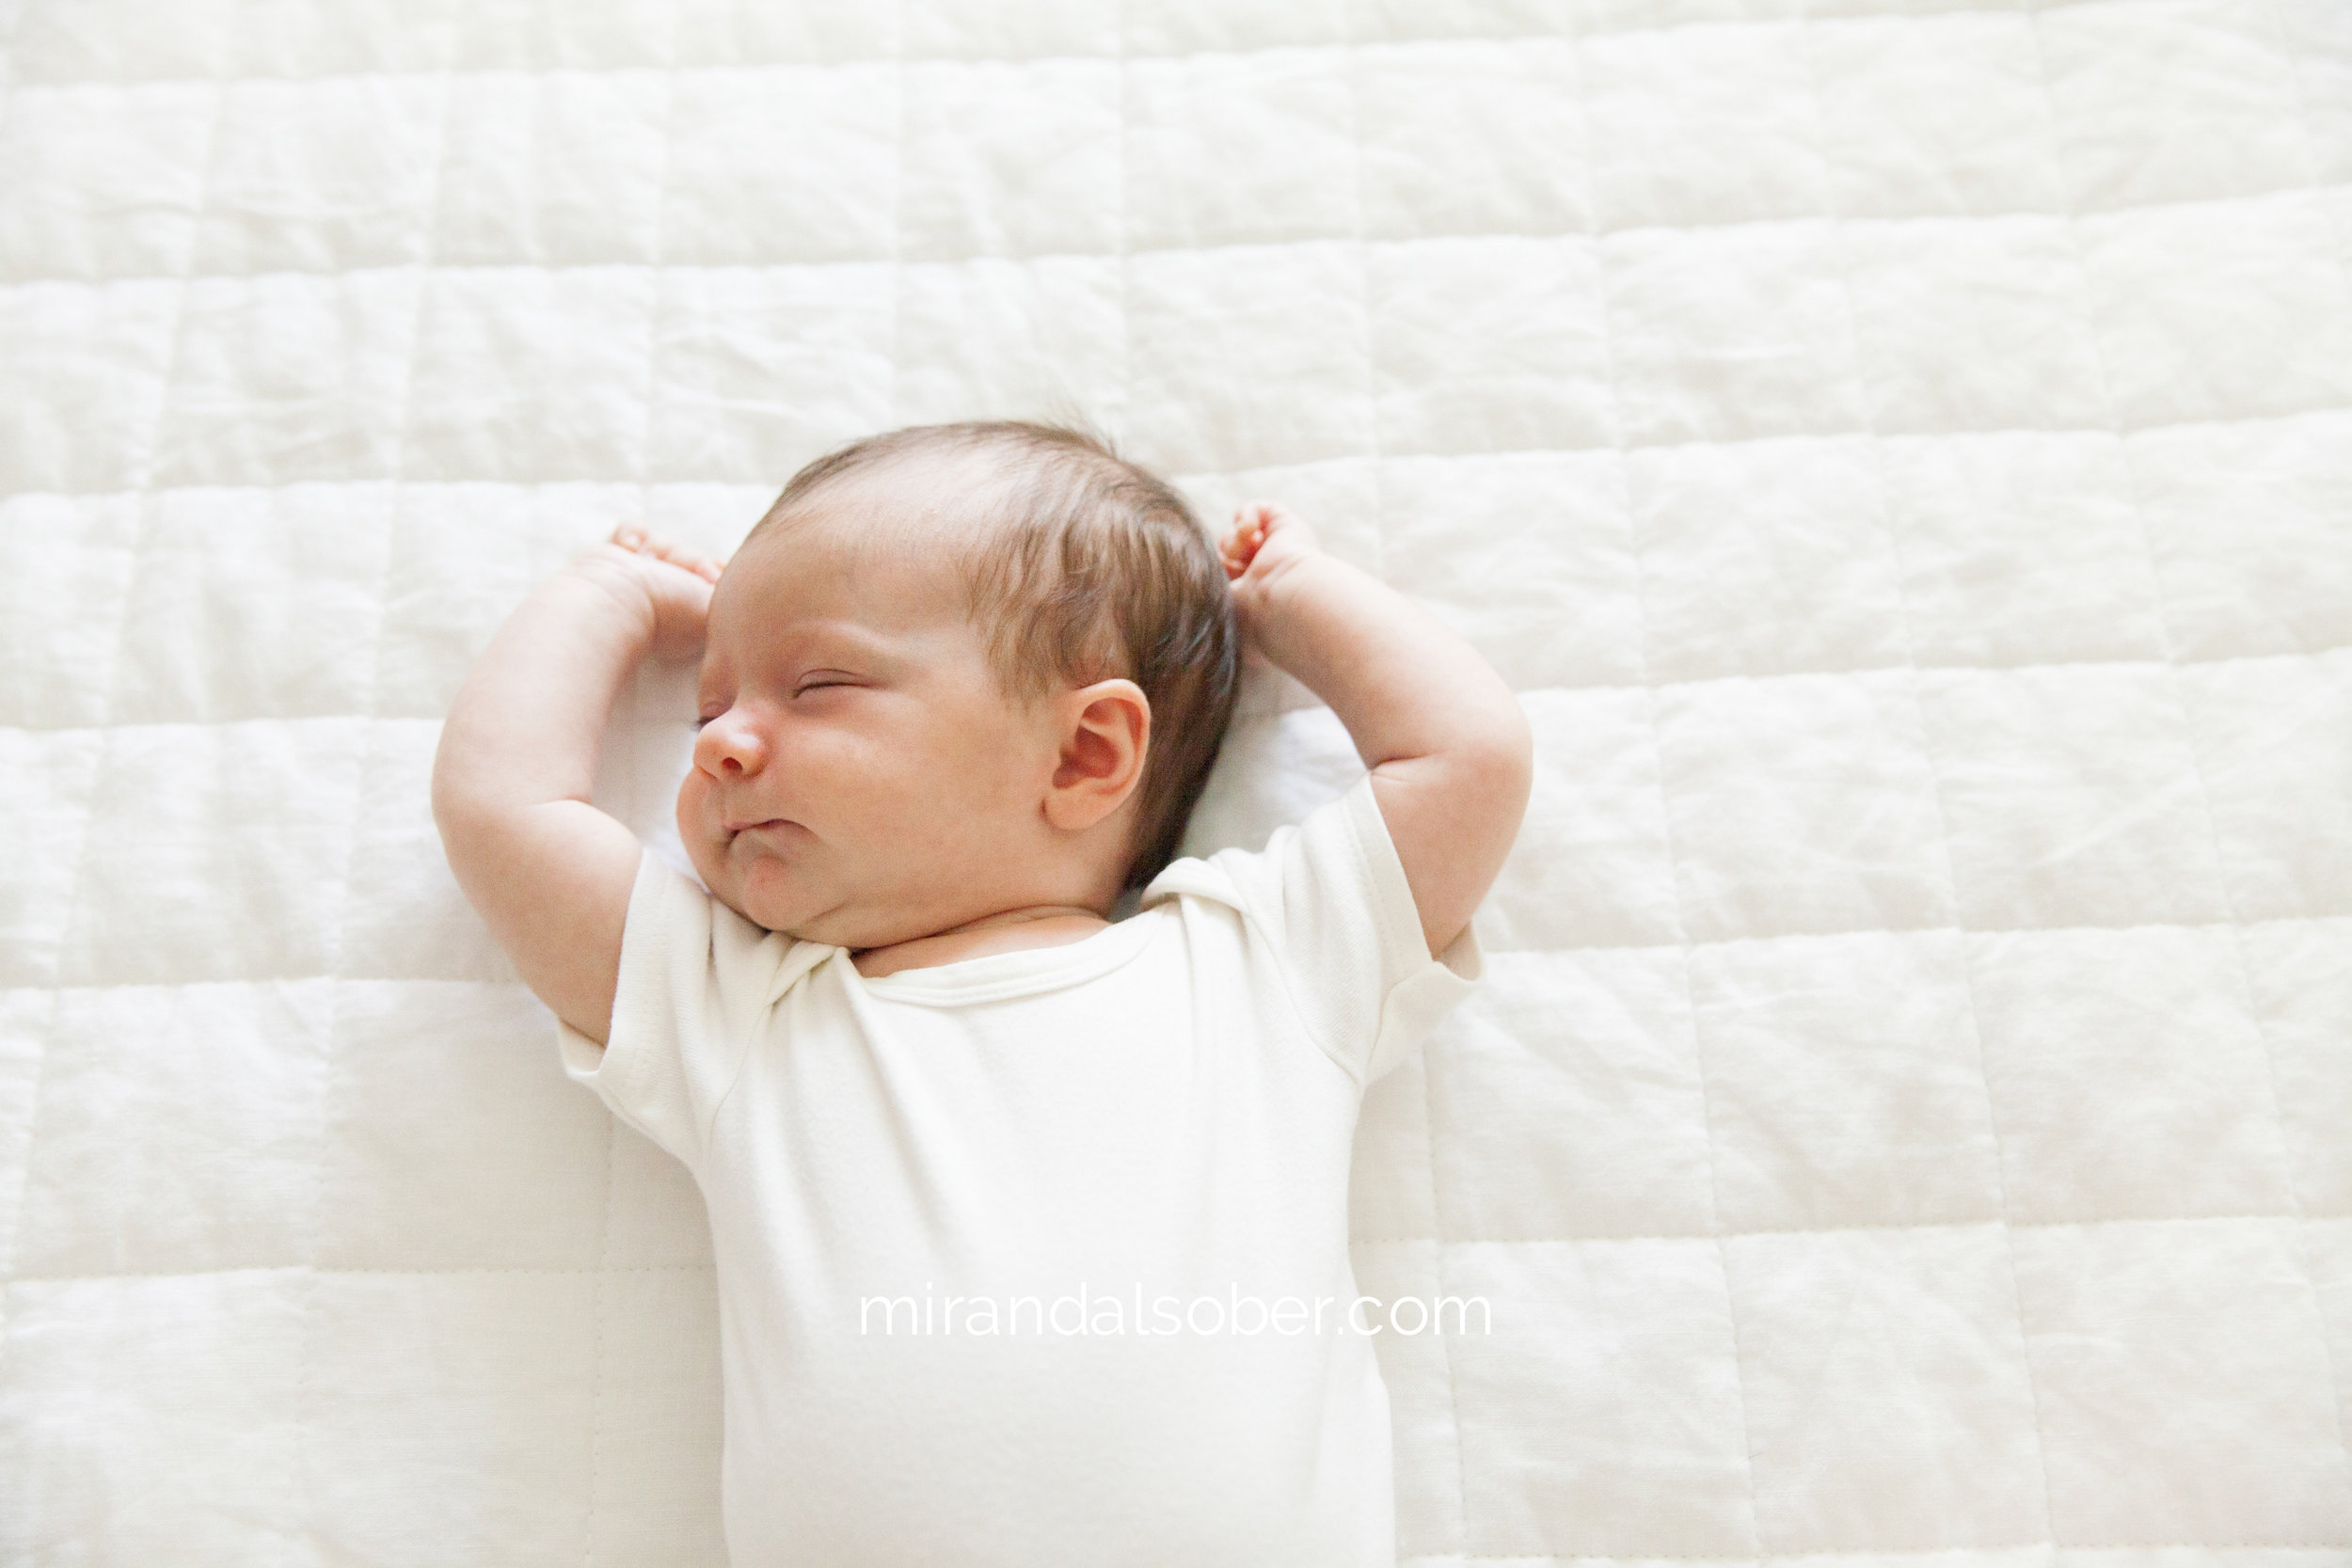 Boulder newborn photographer, lifestyle baby photographer Miranda L. Sober Photography